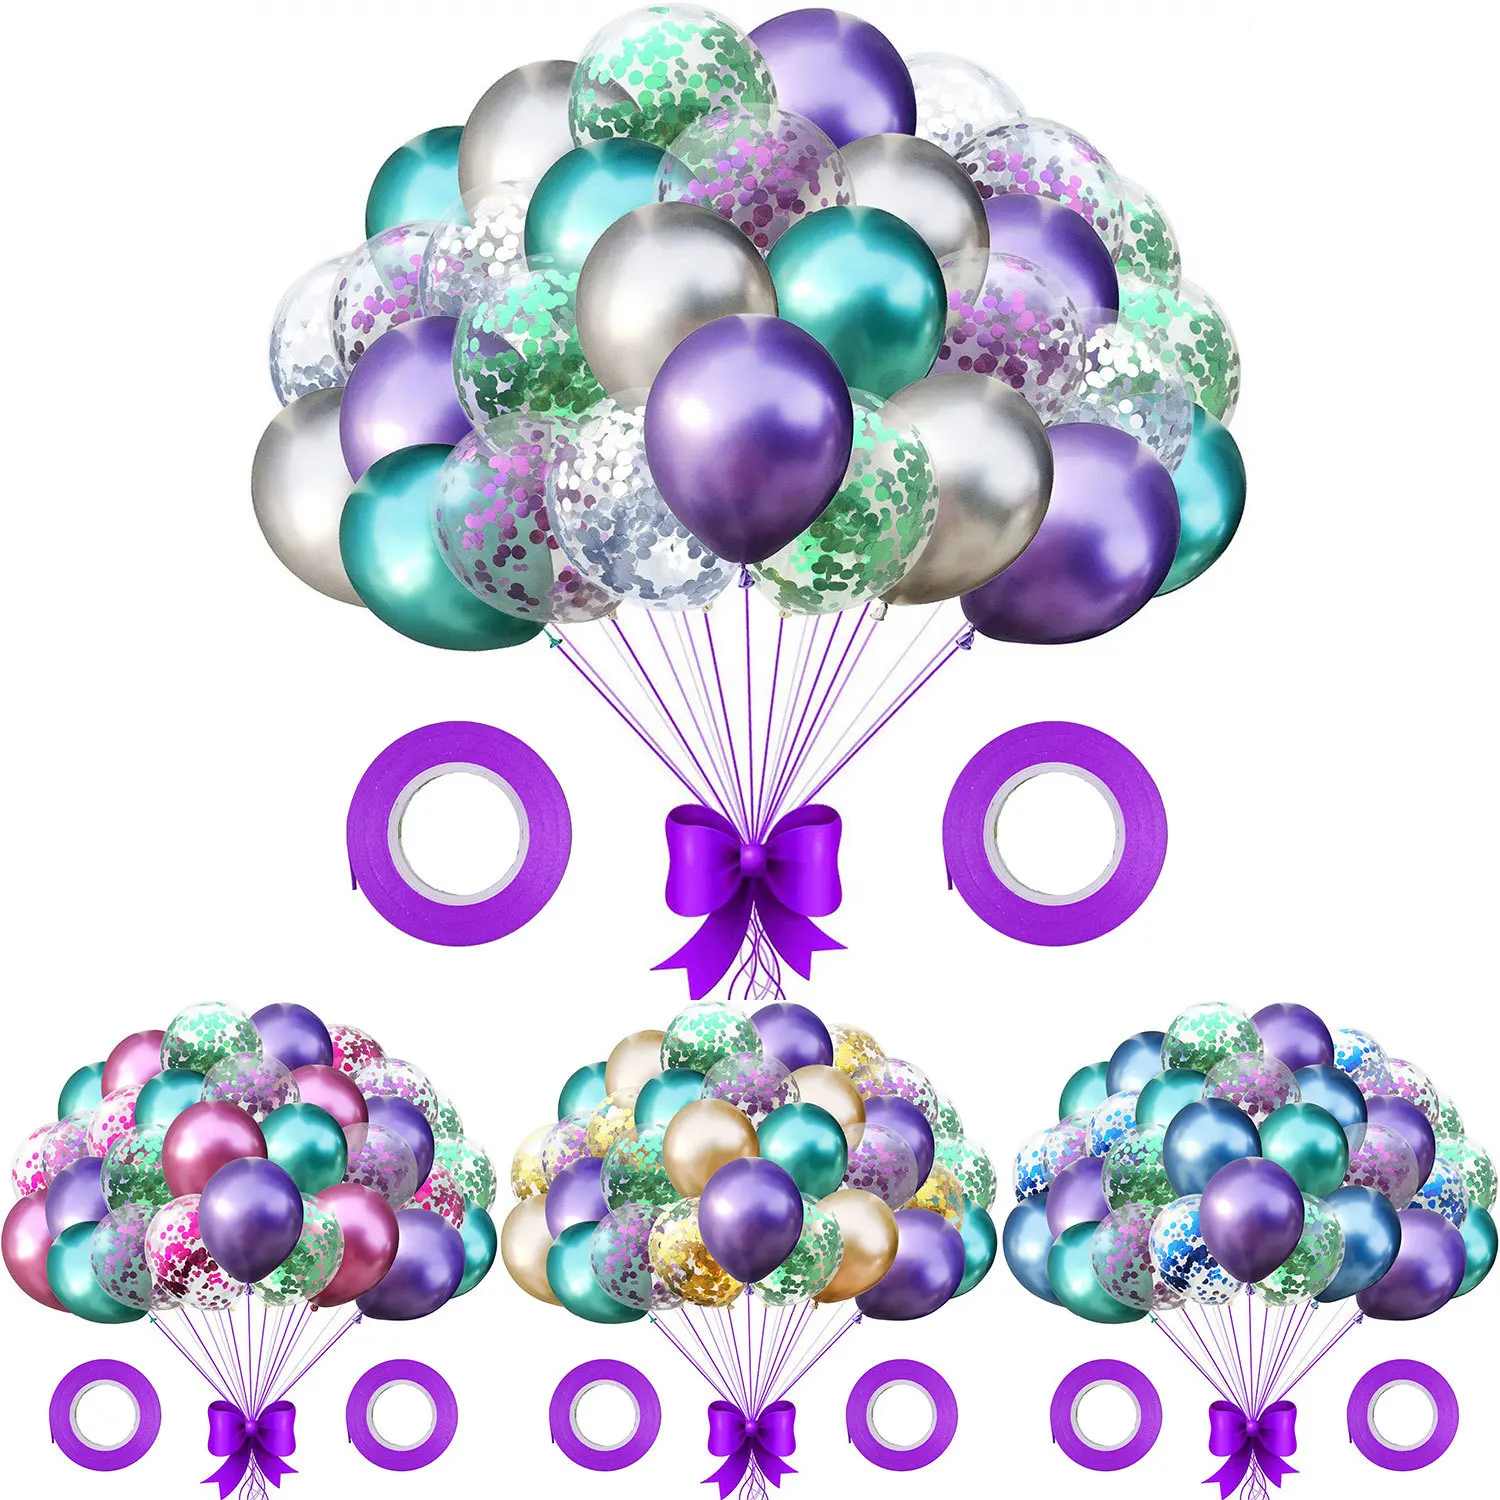 Metallic Balloon Baby Shower Gender Reveal Decorations Event Wedding Sequins Balloon Arch Happy Birthday Party Decor Accessories